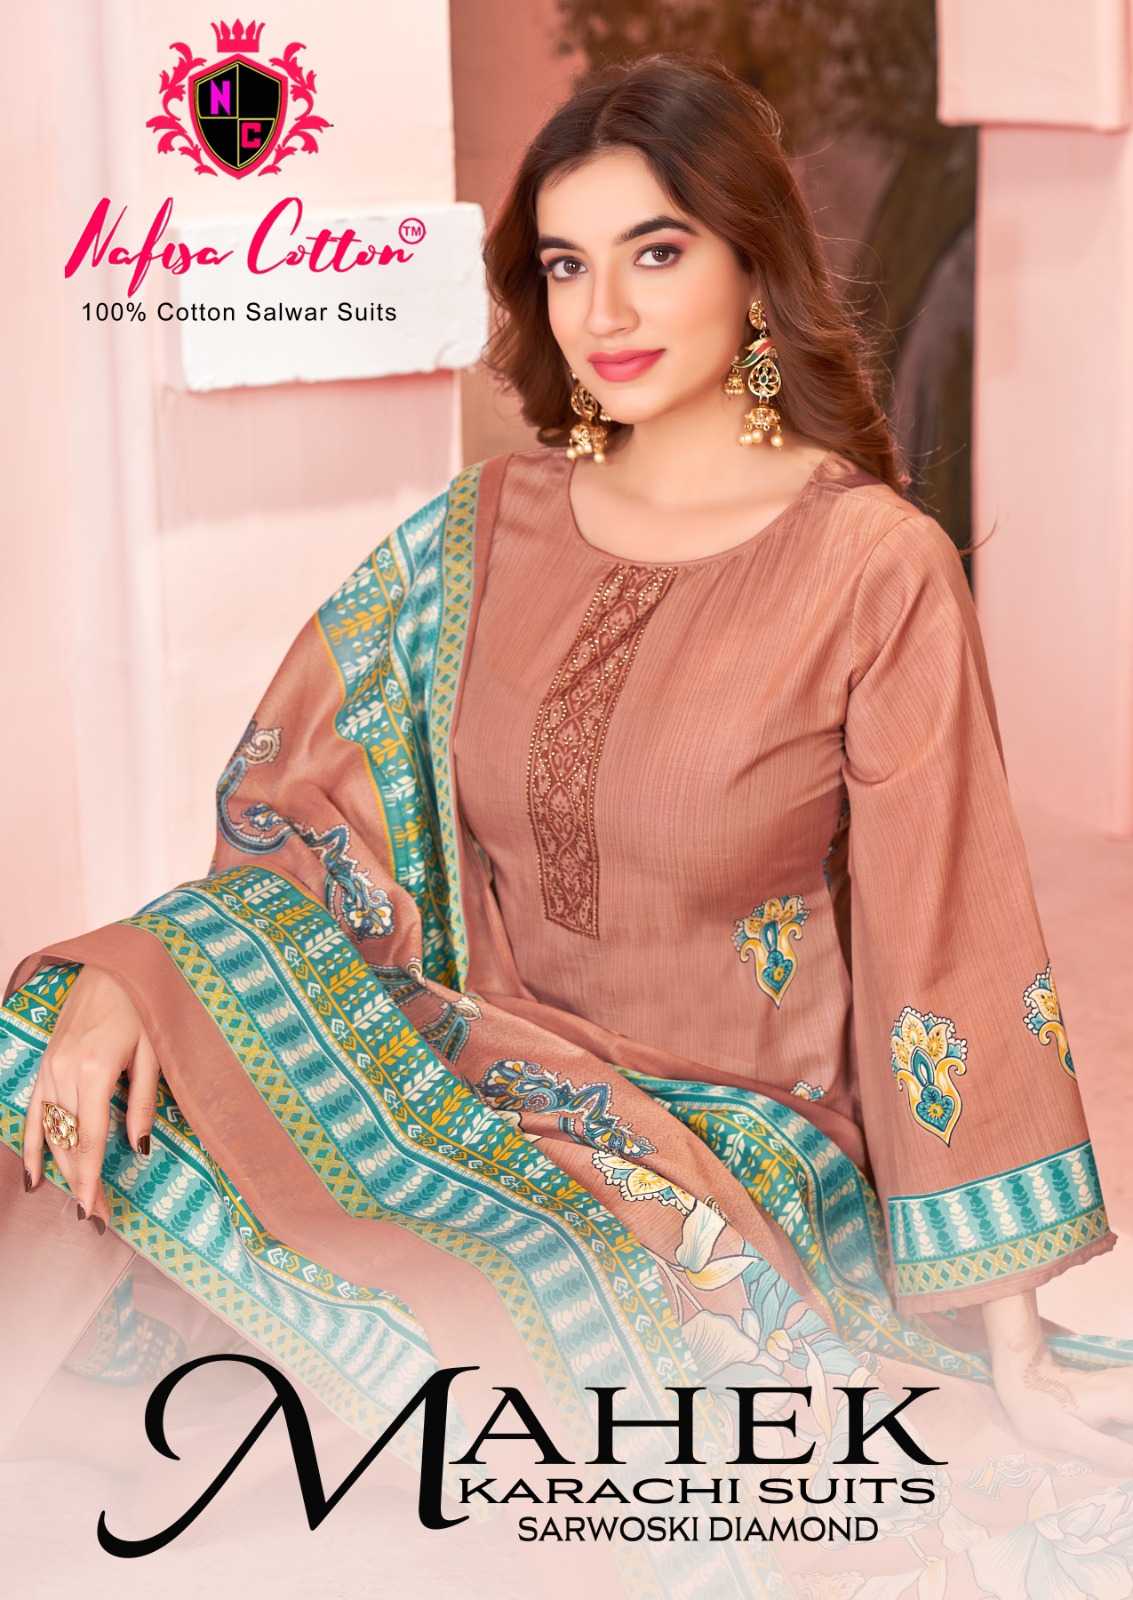 nafisa cotton mahek karachi print pakistani cotton ladies suit